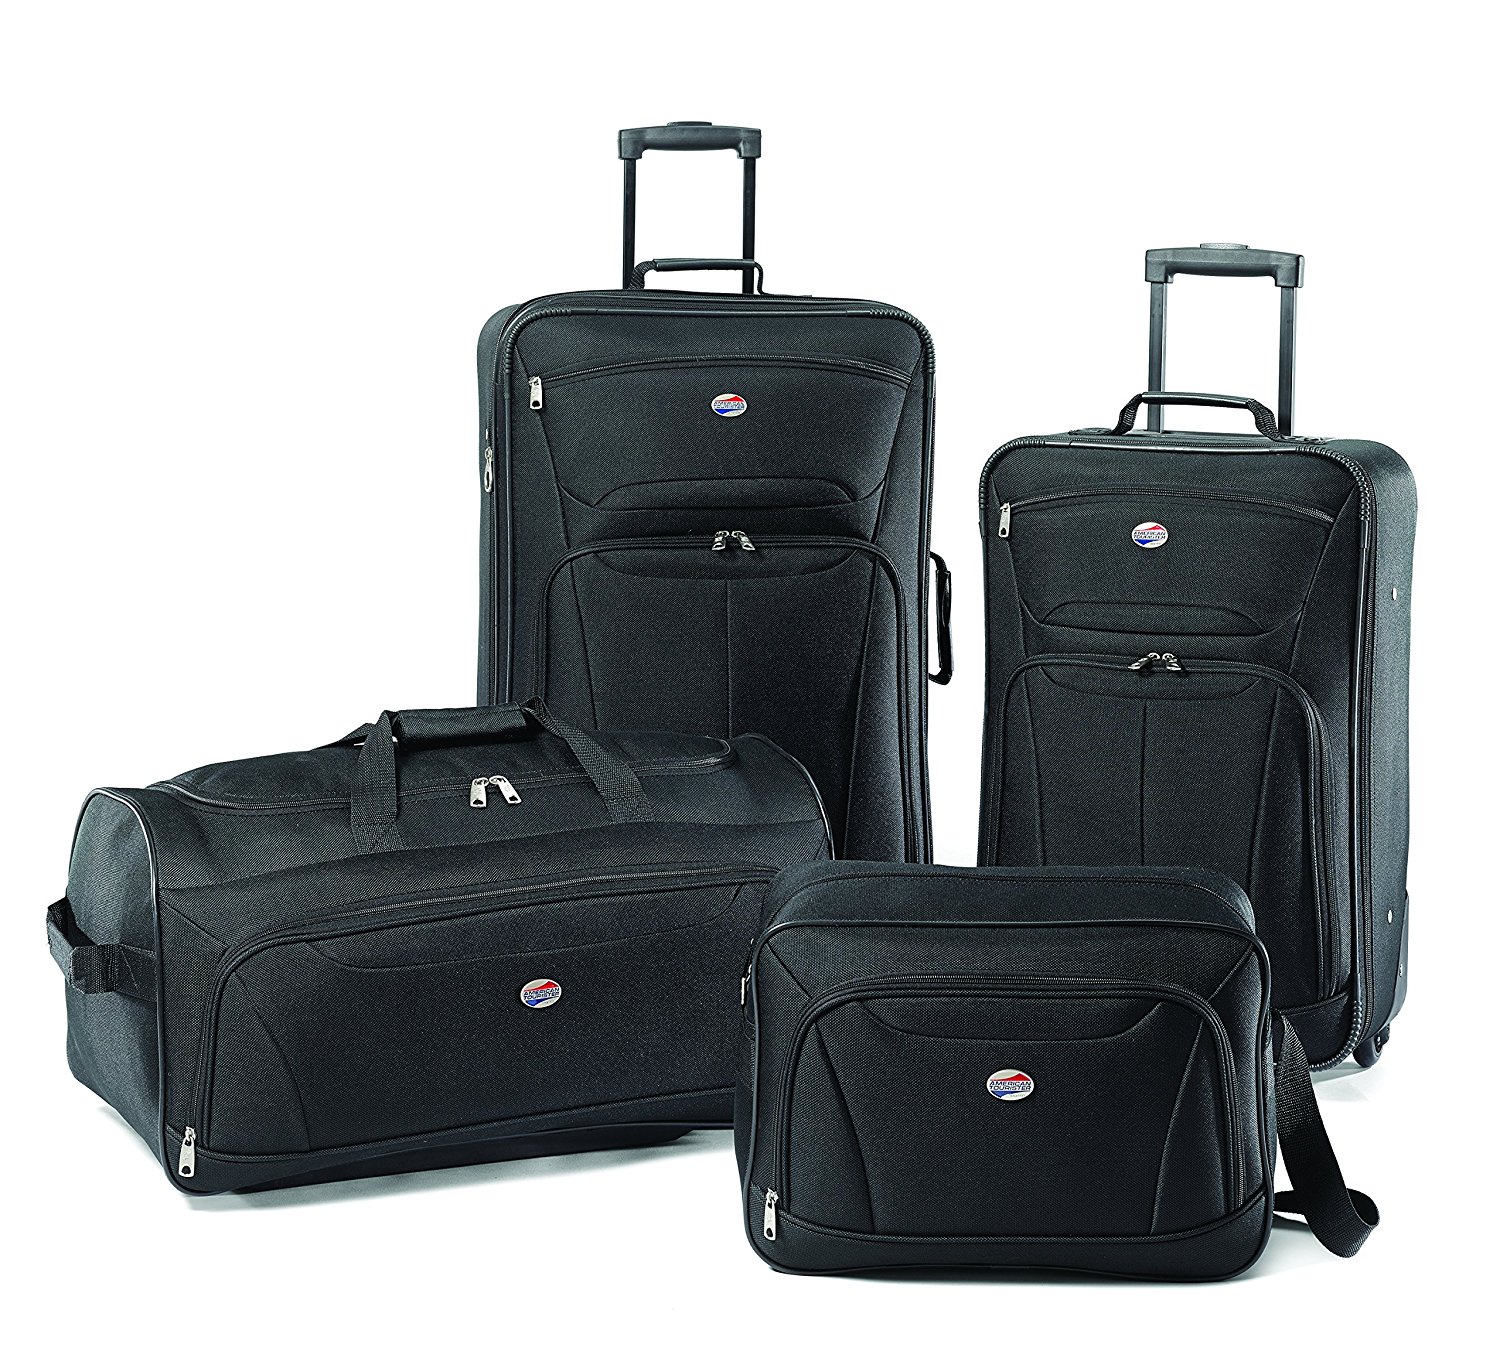 lacoste luggage sets